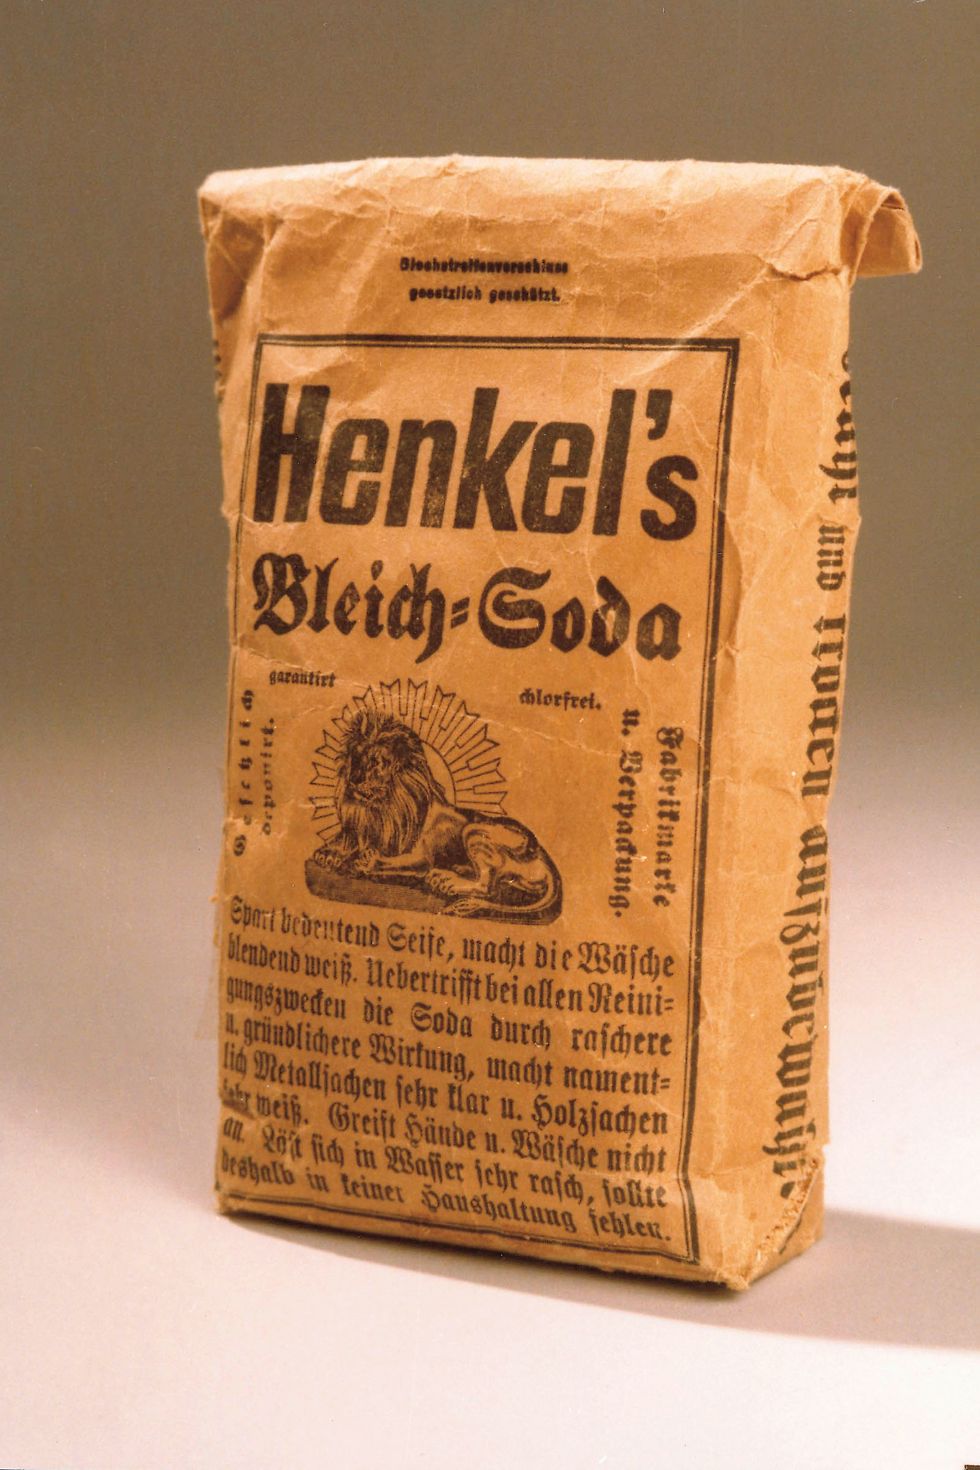 Henkel’s Bleich-Soda (bleaching soda)